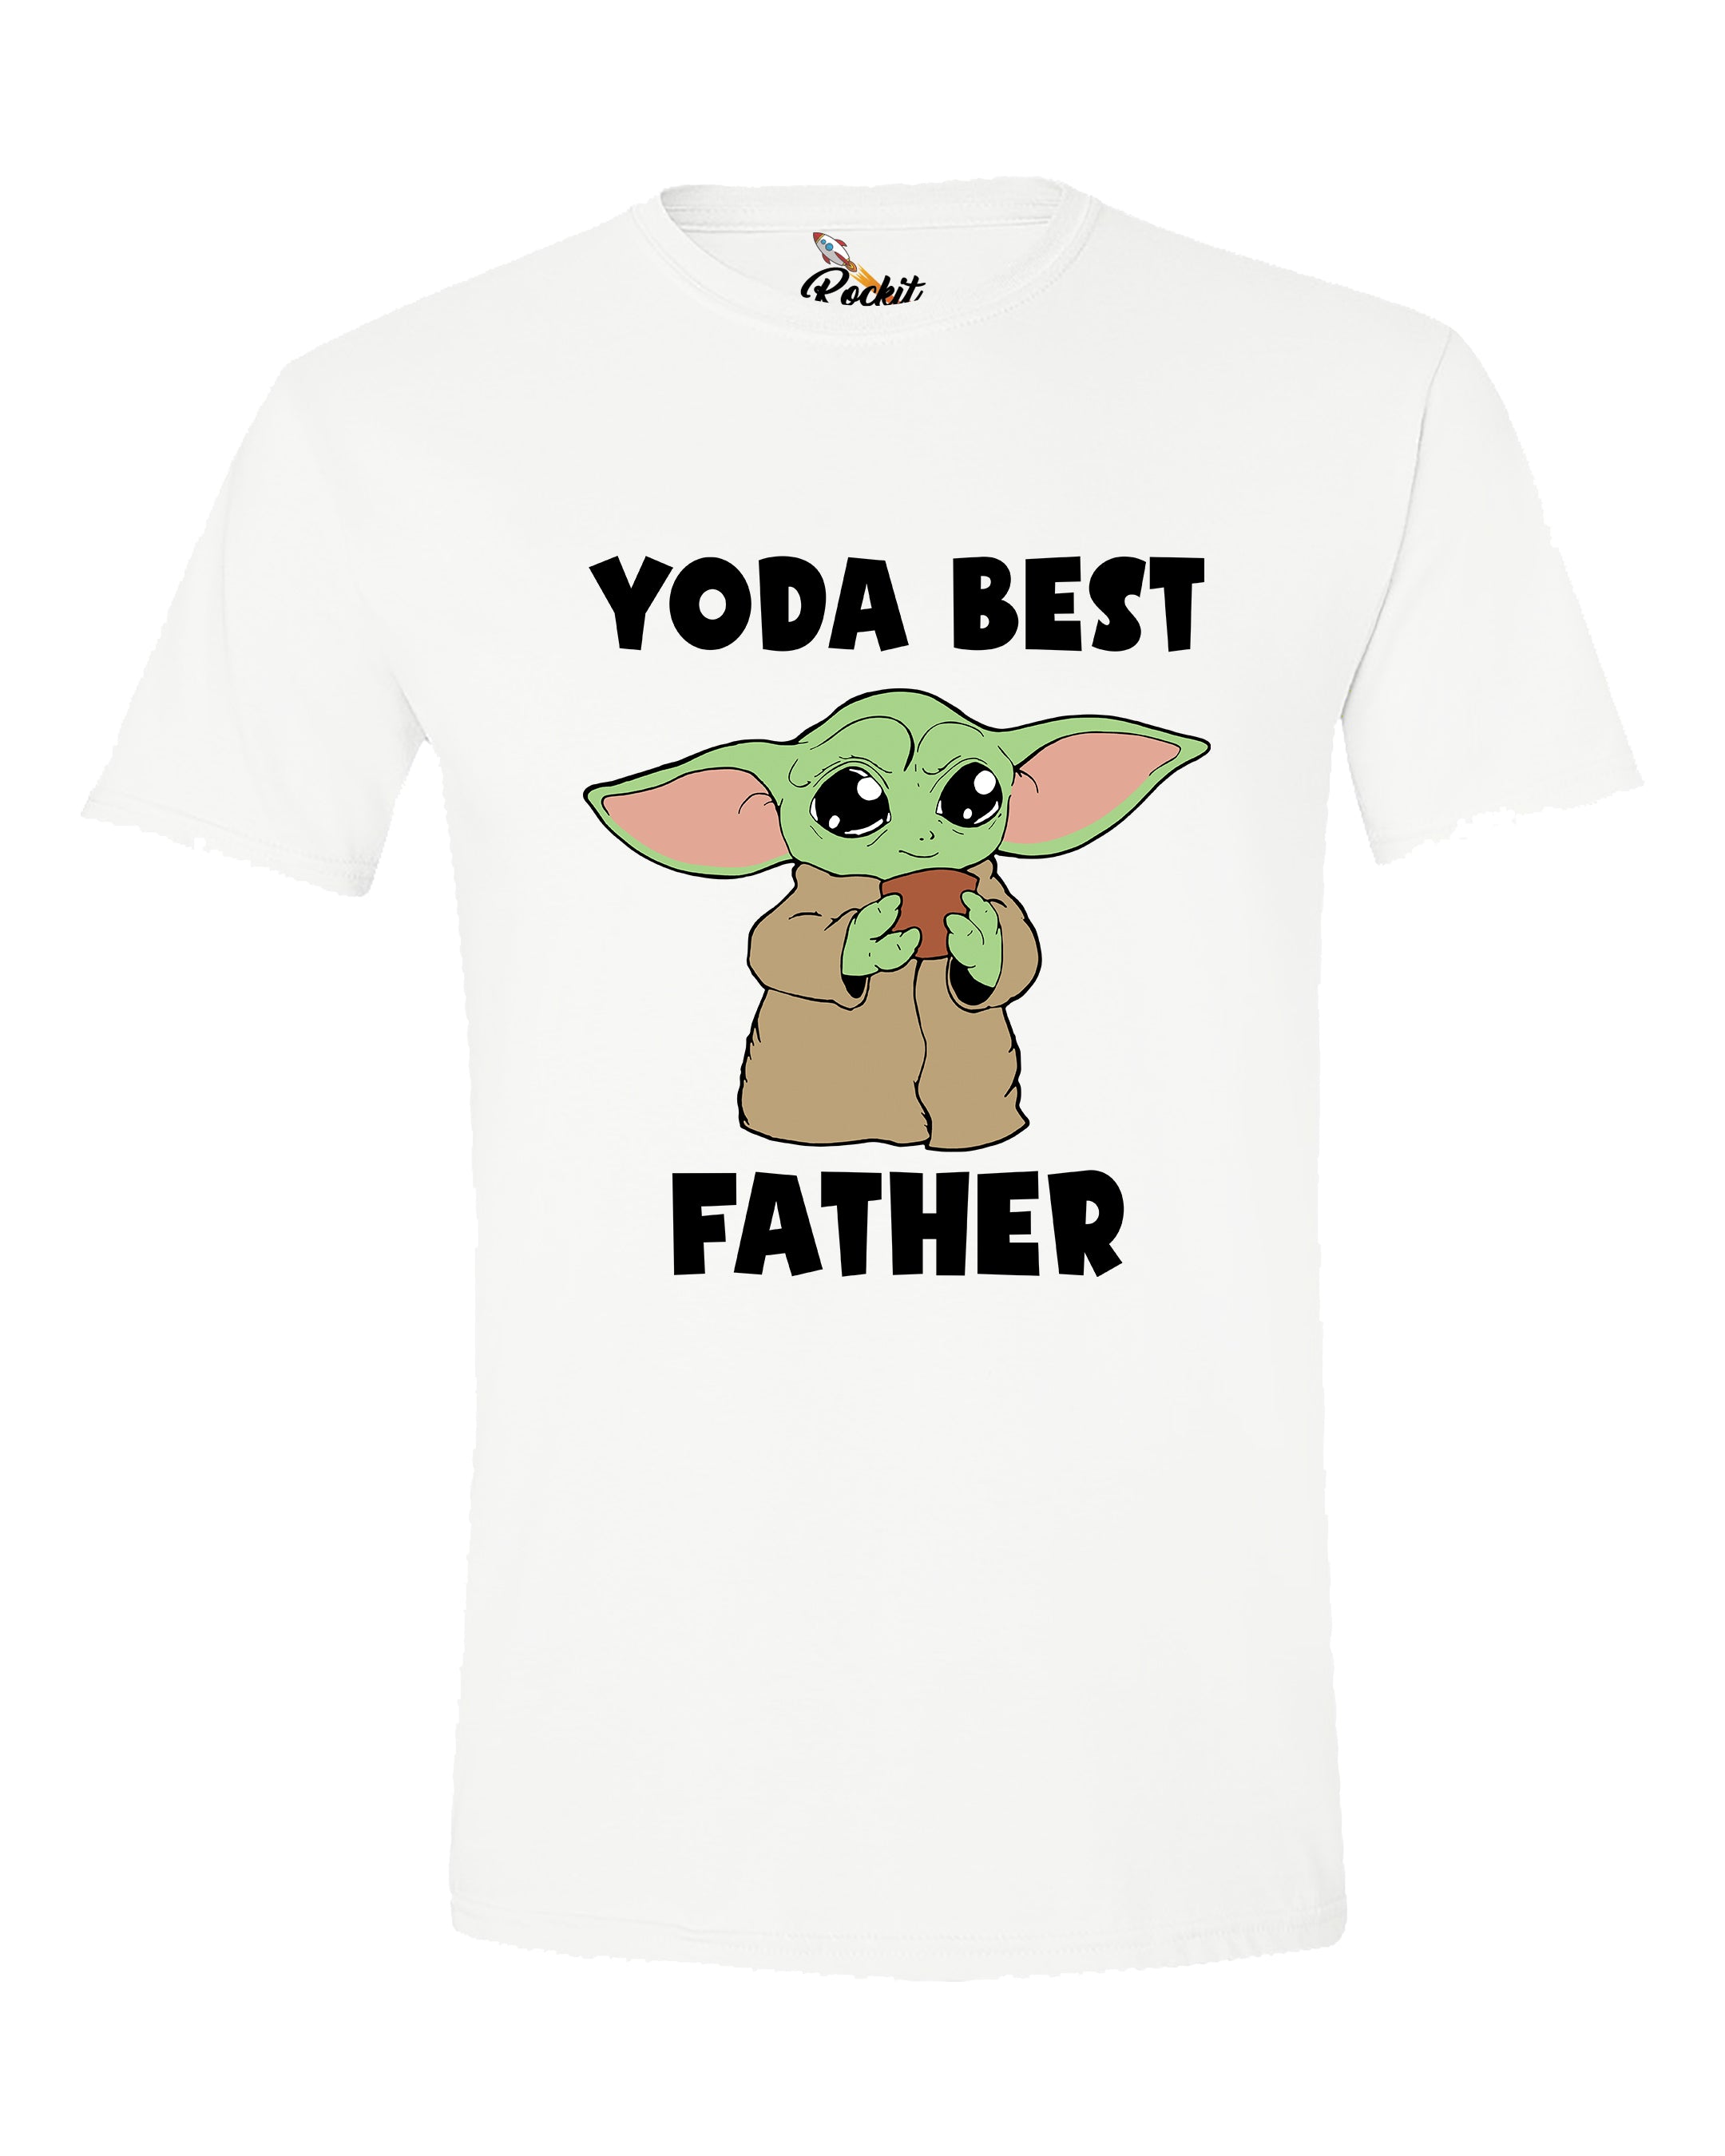 Yoda Best Father Tee